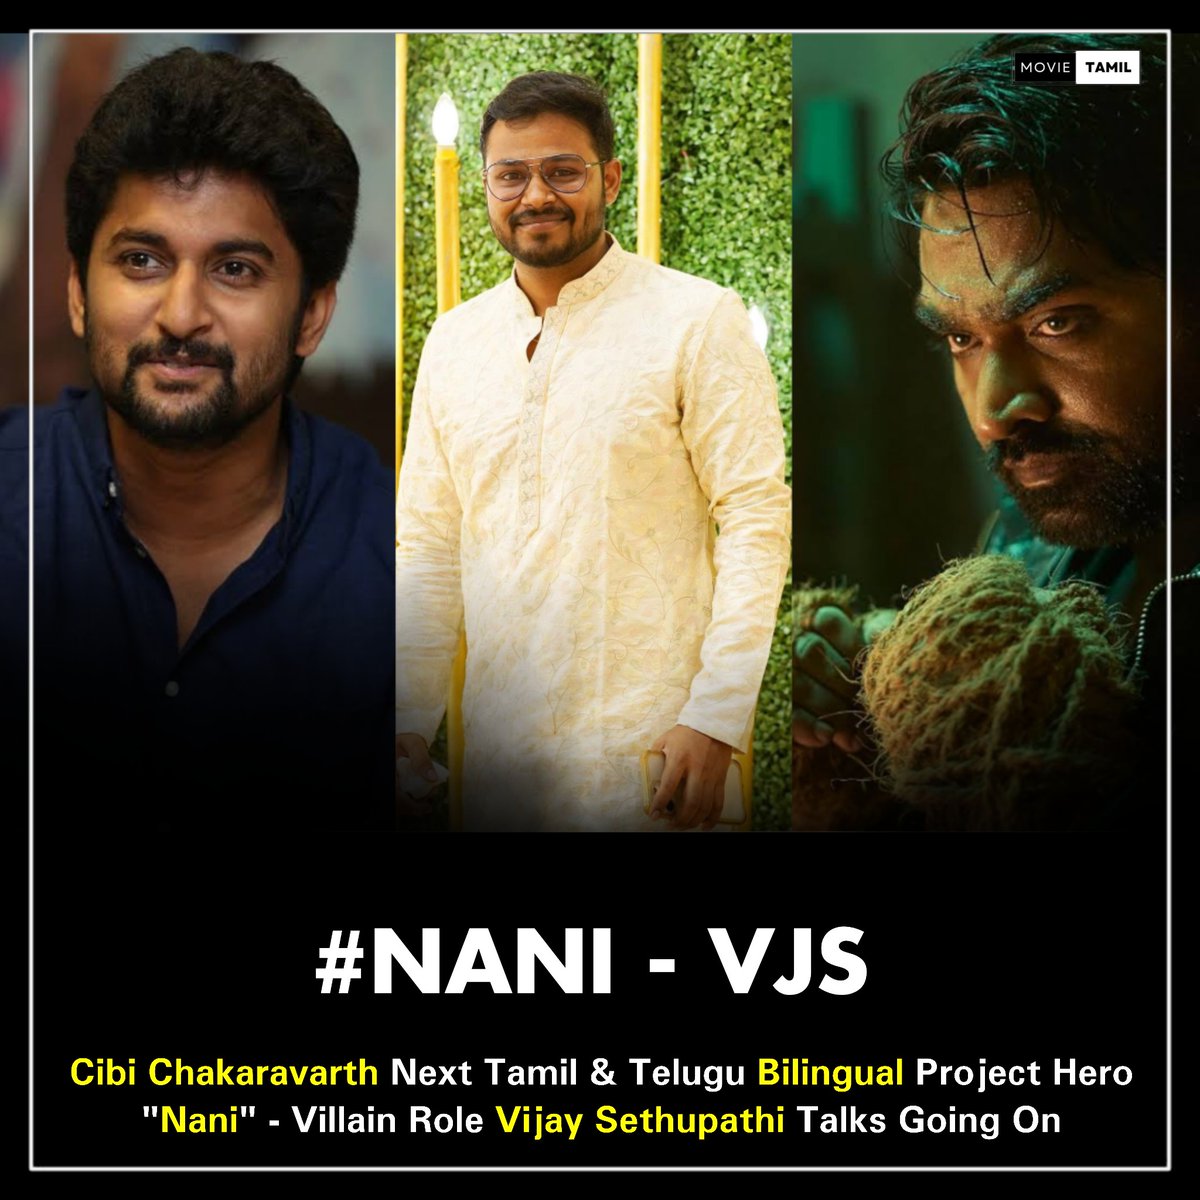 Exclusive

🔸#DON - Director #CibiChakaravarth Next Project Was Tamil & Telugu bilingual Movie Actor '#Nani' Lead Role

Follow For More update 🙏

🔹#VijaySethupathi Villain Role Talks Going On 🥳

#HiNannaOnDec7th #Nani31 #SK Project Next

#VJS50 #Maharaja